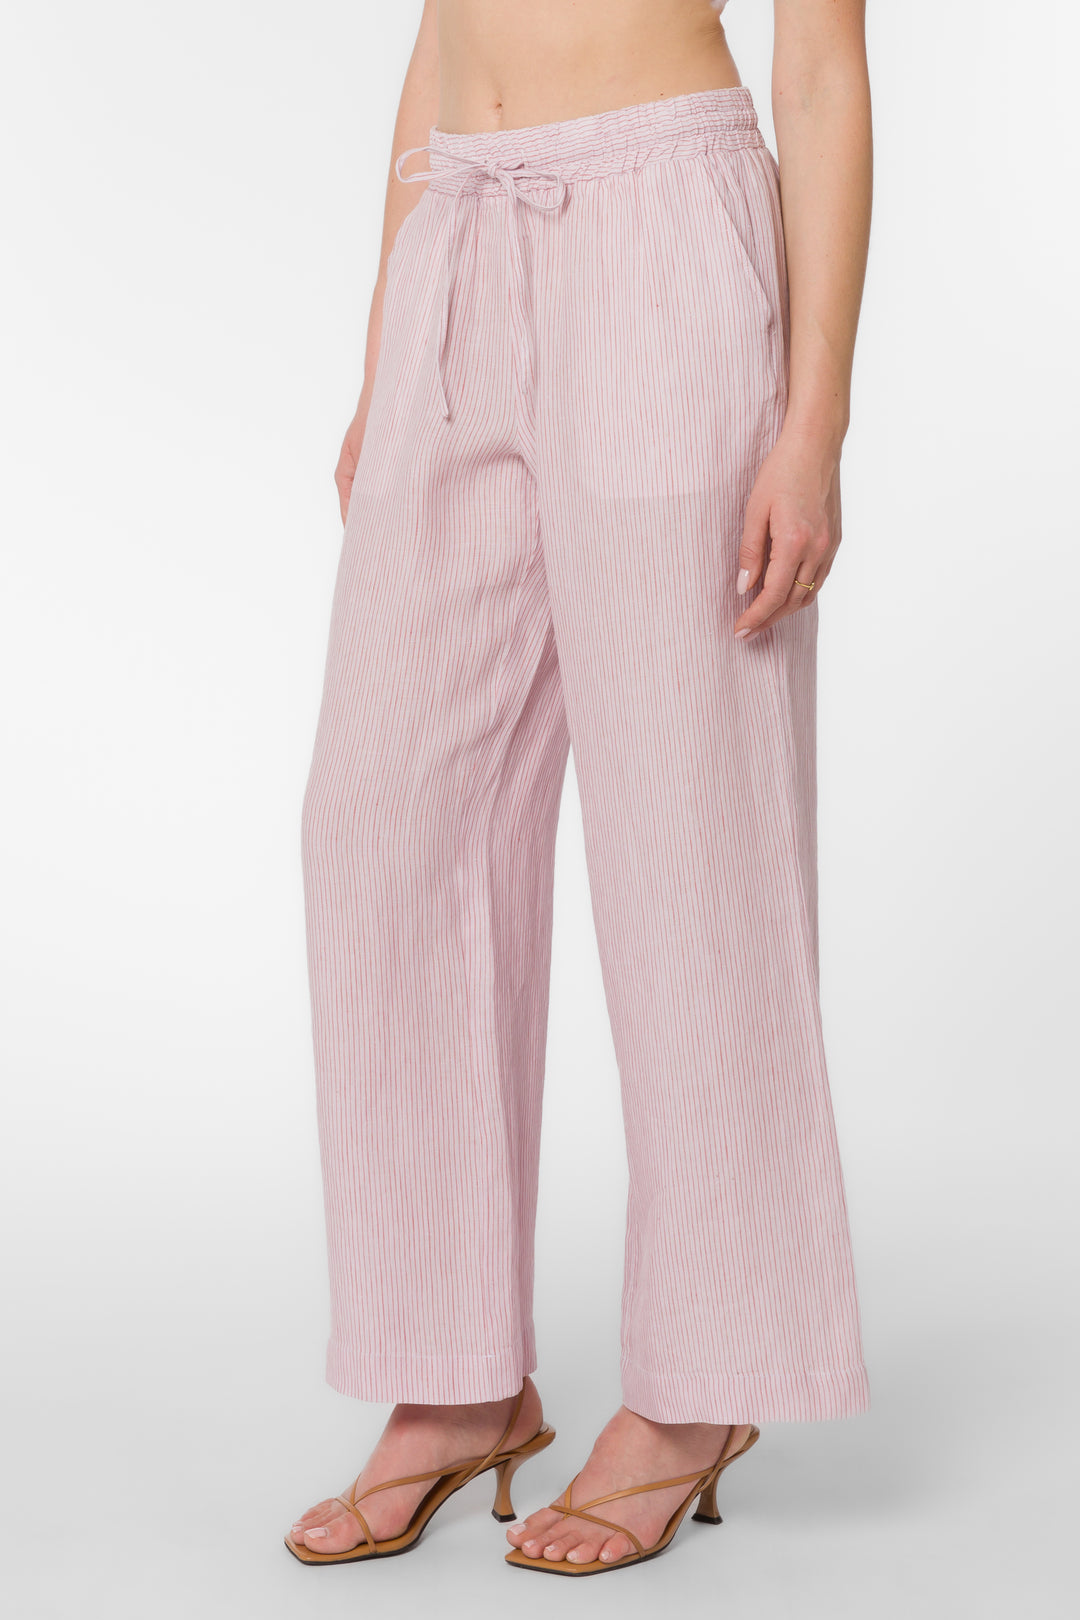 Wendy Canyon Rose Stripe Pants - Bottoms - Velvet Heart Clothing